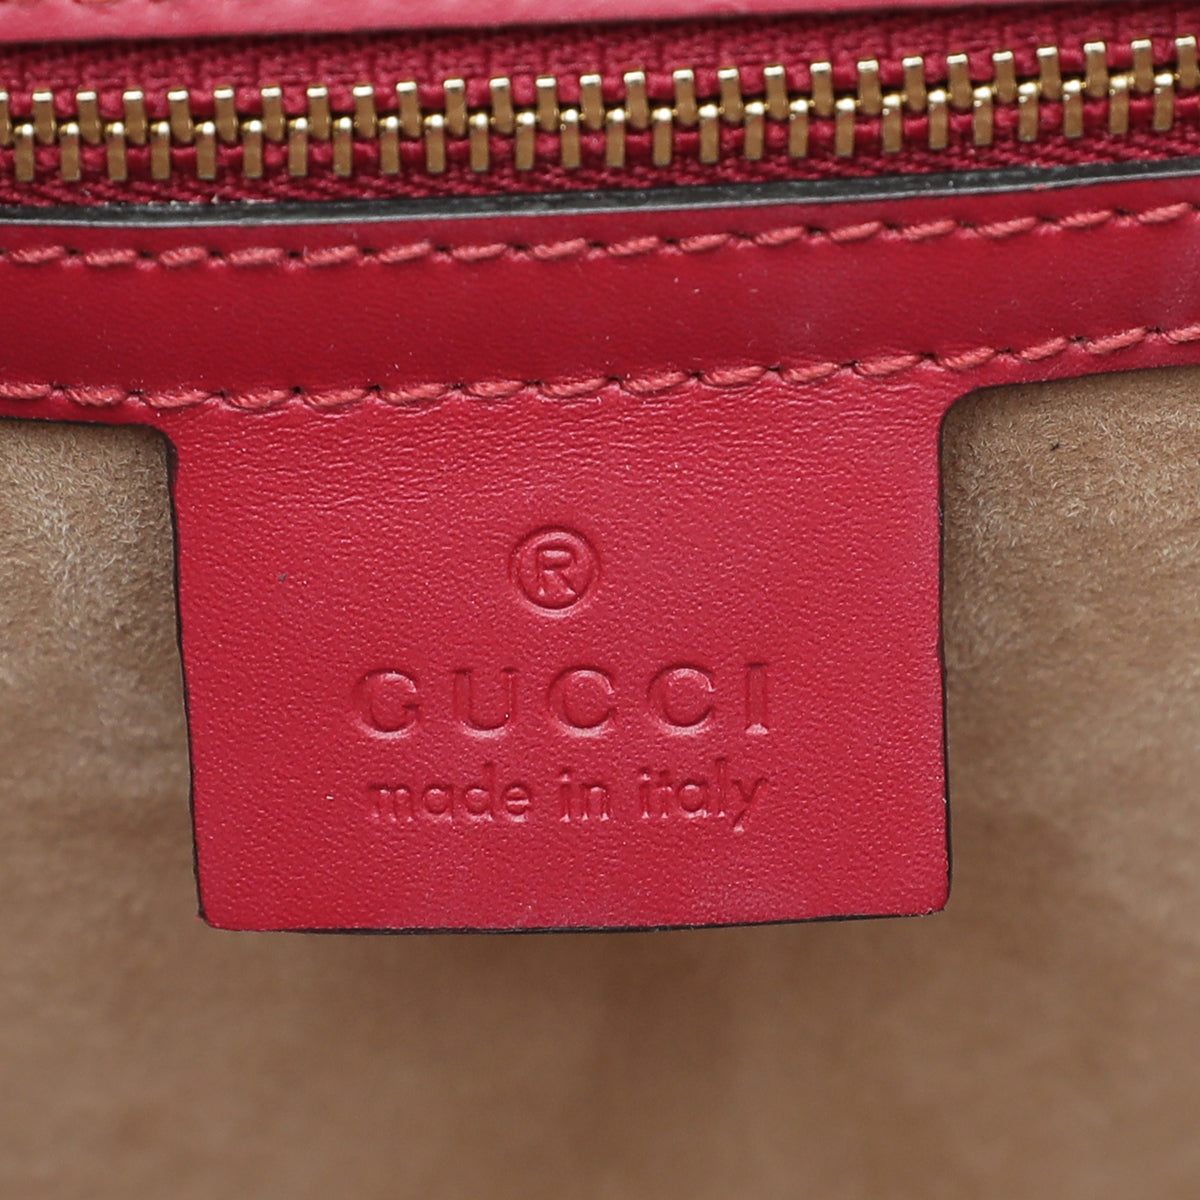 Gucci Red Sylvie Small Bag